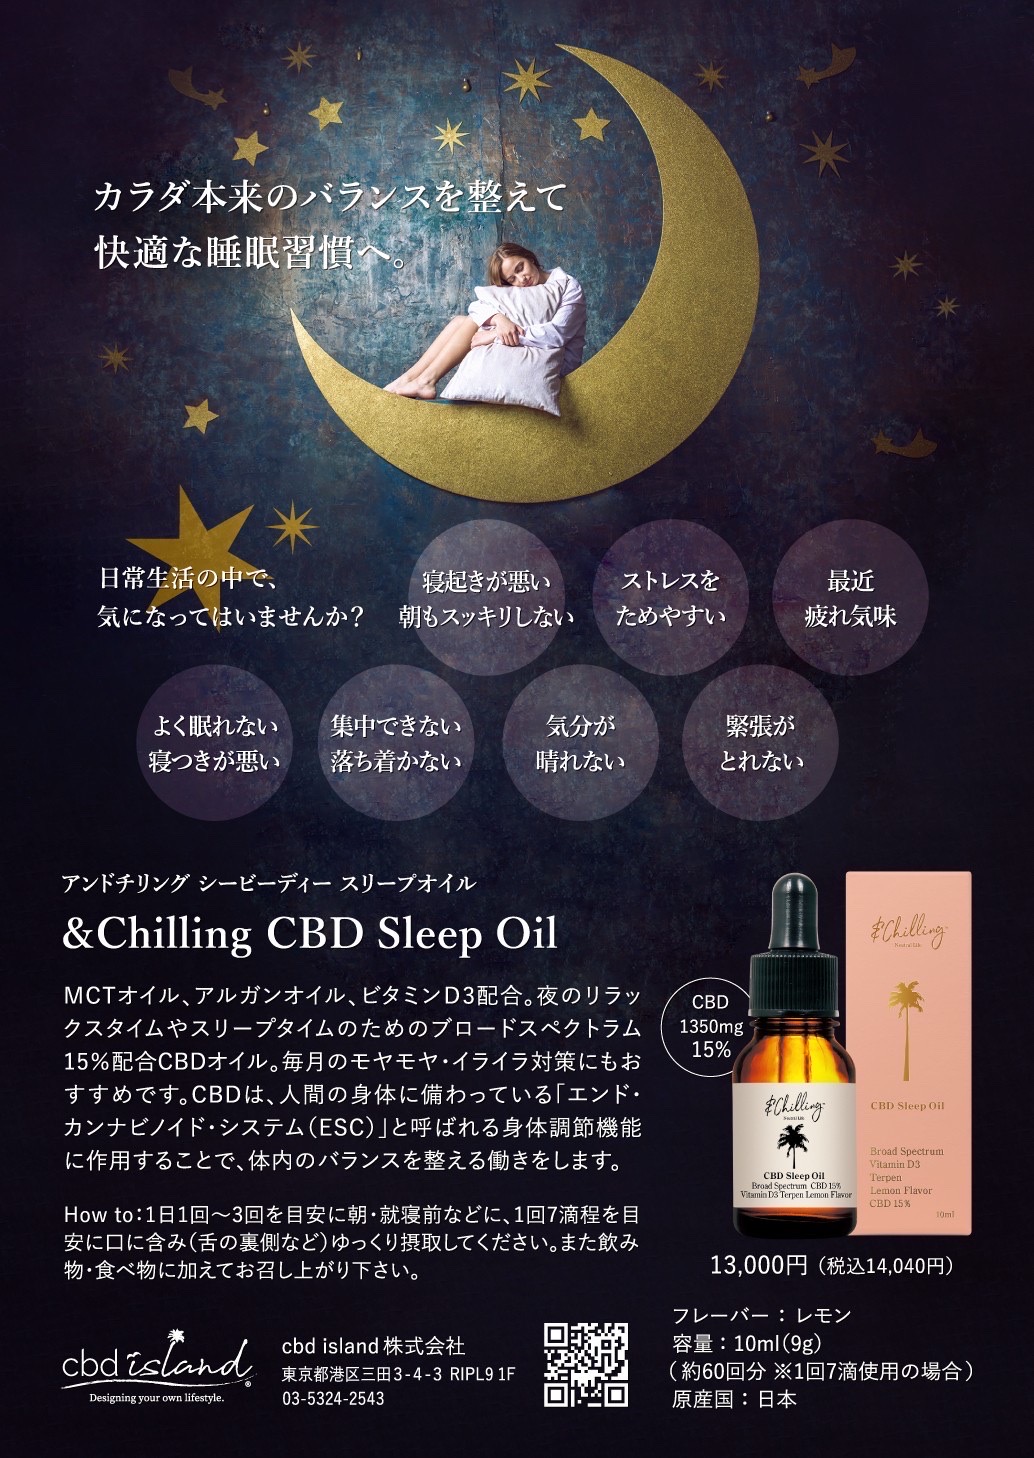 & Chilling CBD Sleep Oil